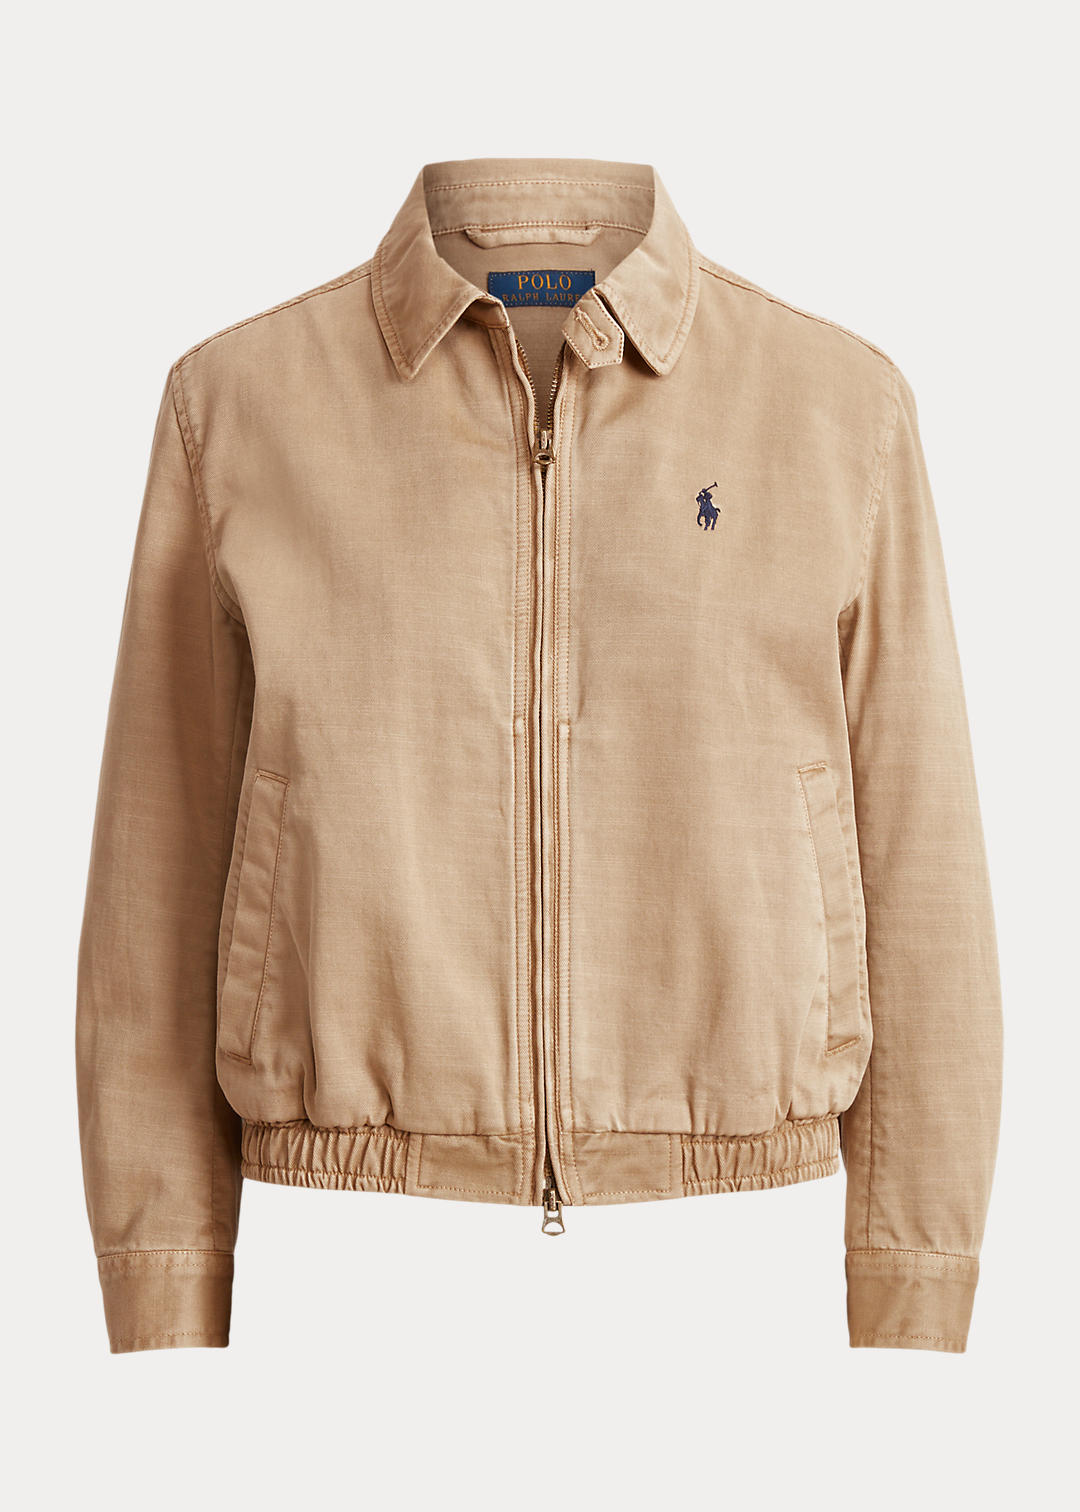 Polo Ralph Lauren Cotton Chino Jacket 2